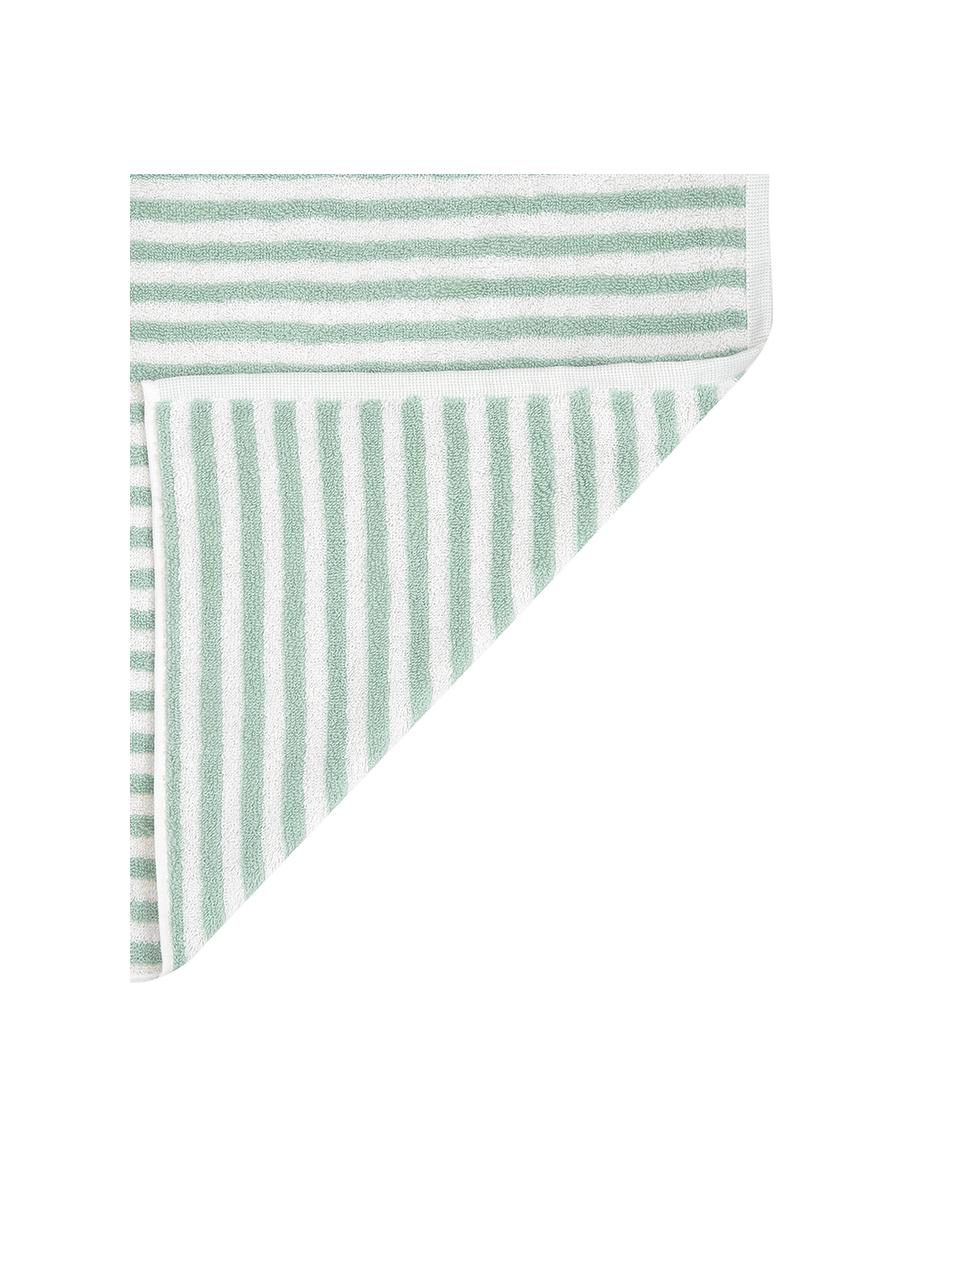 Sada ručníků Viola, 3 díly, Zelená máta, bílá, Sada s různými velikostmi